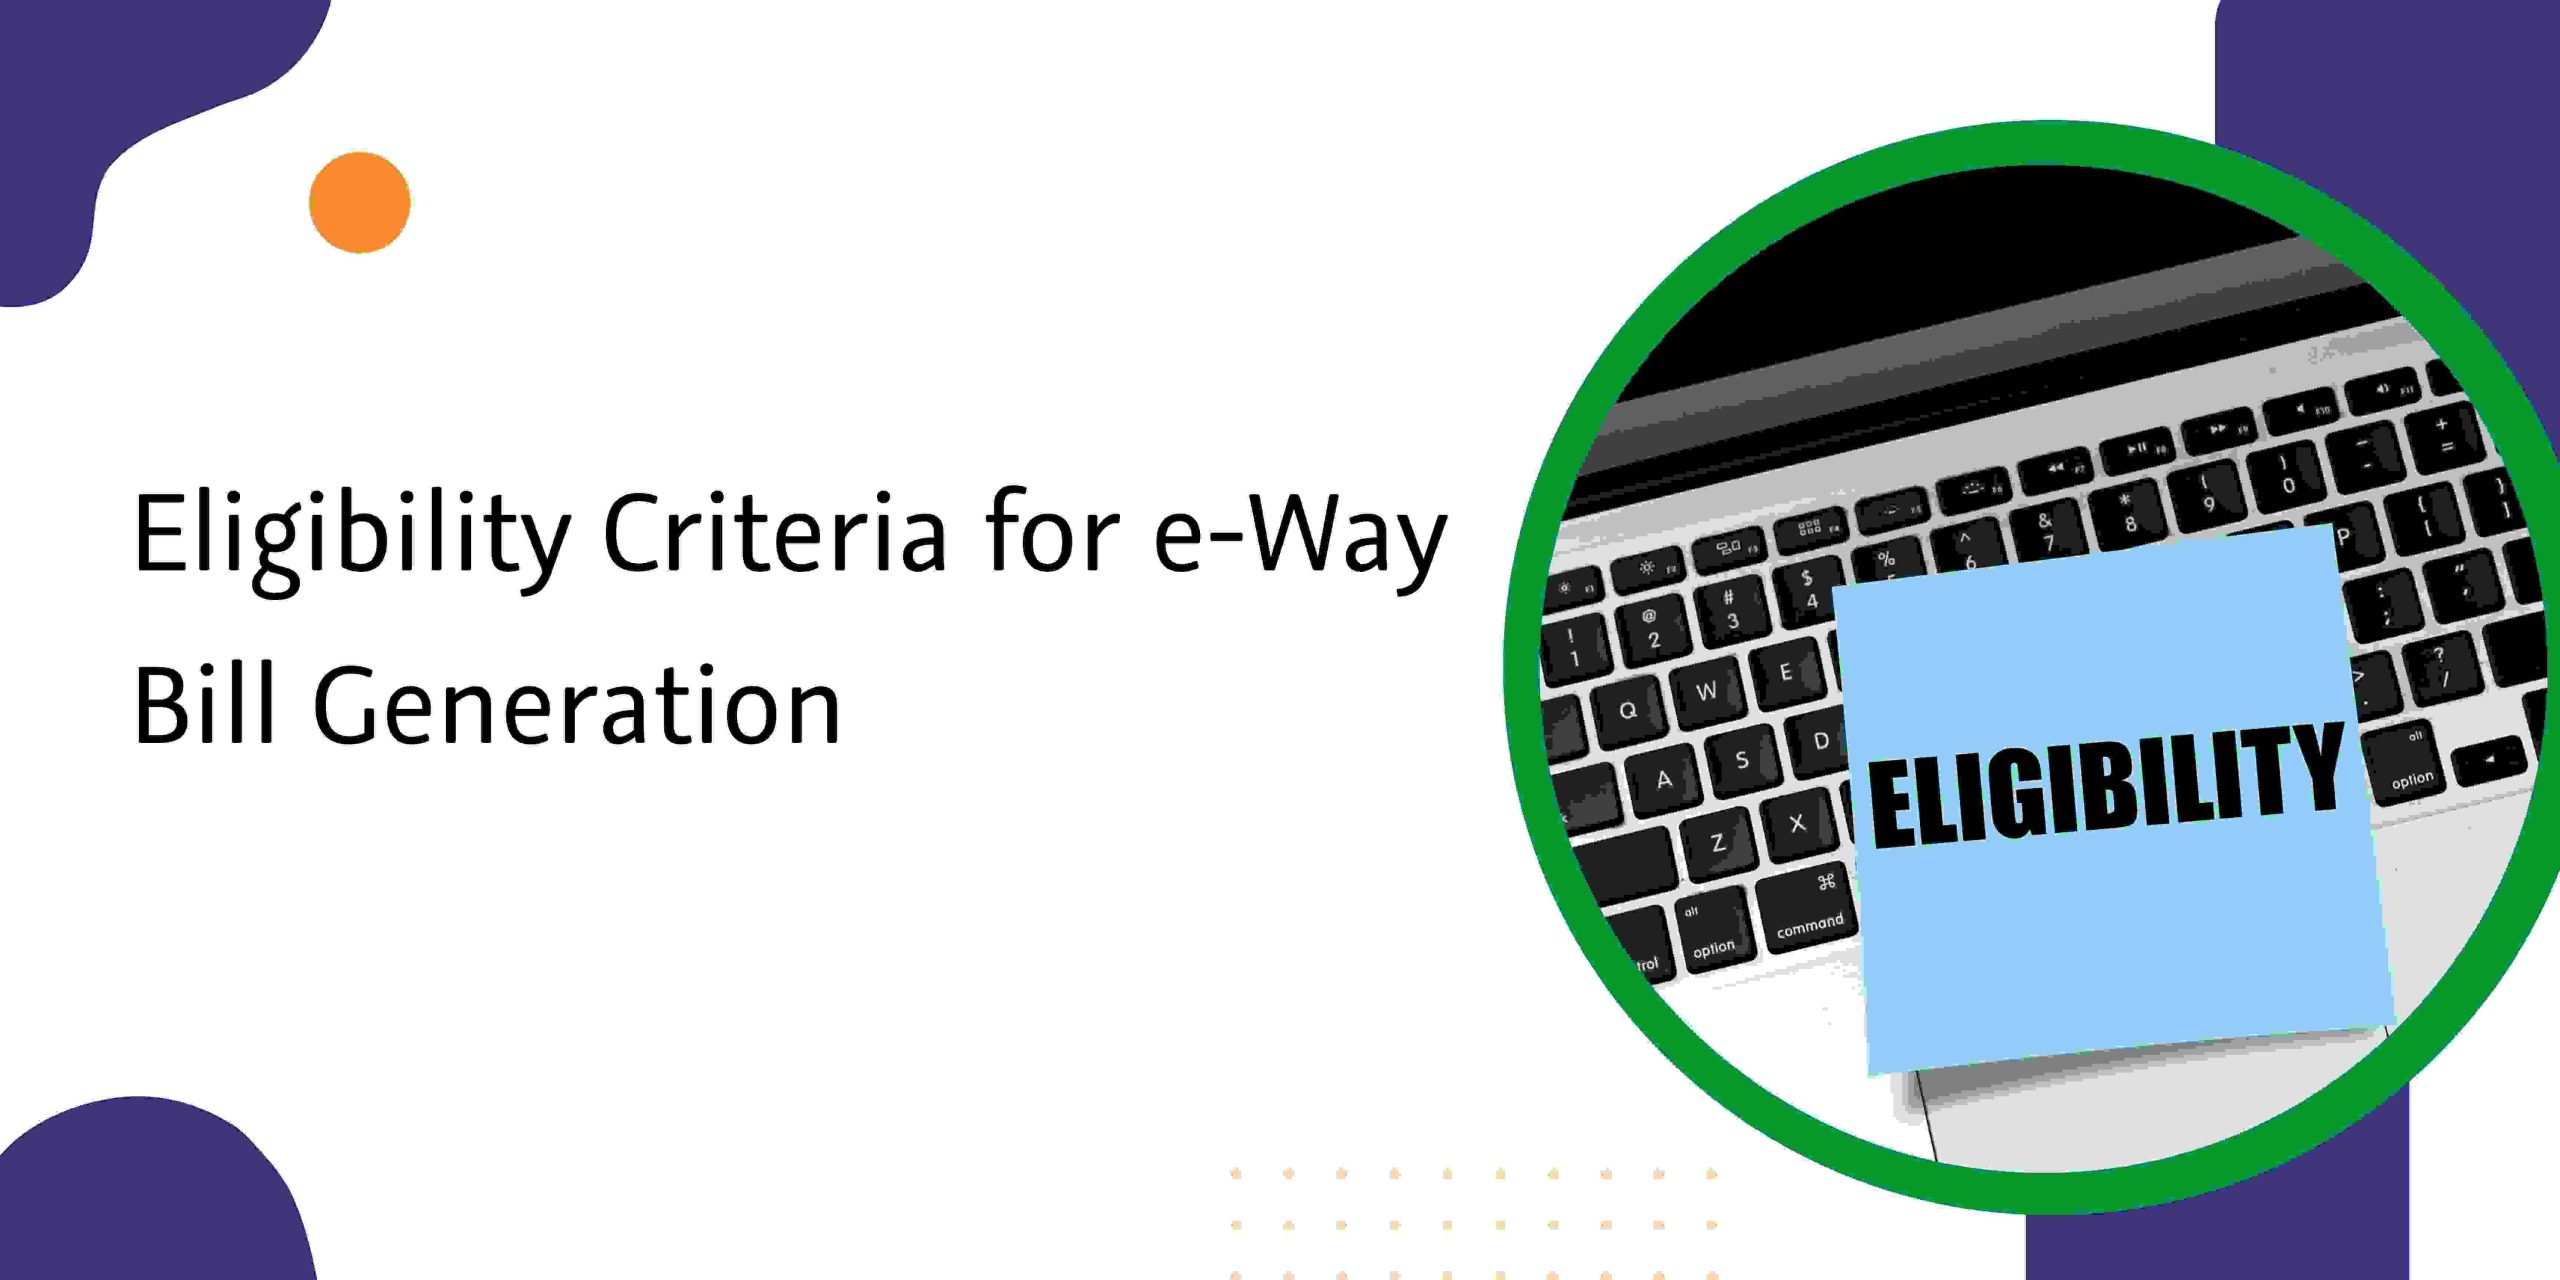 CaptainBiz: Eligibility Criteria for e-Way Bill Generation